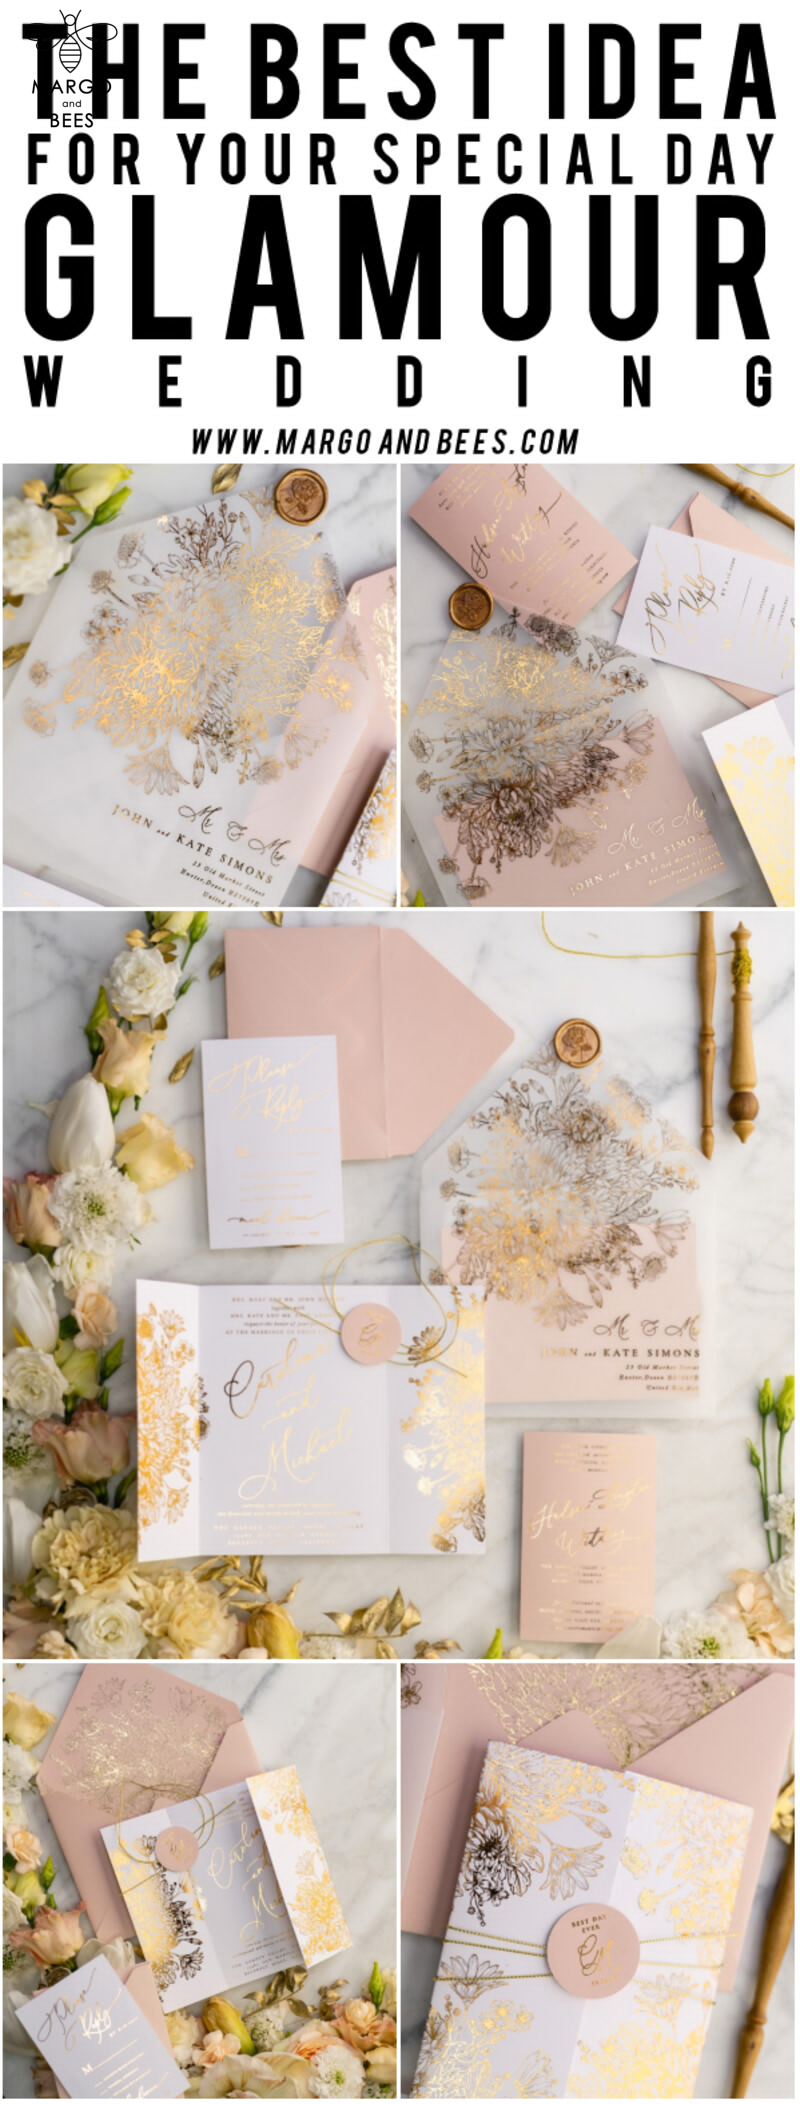 Elegant Luxury Arabic Golden Wedding Invitations with Glamour Gold Foil and Romantic Blush Pink Design: Bespoke Indian Wedding Stationery-42